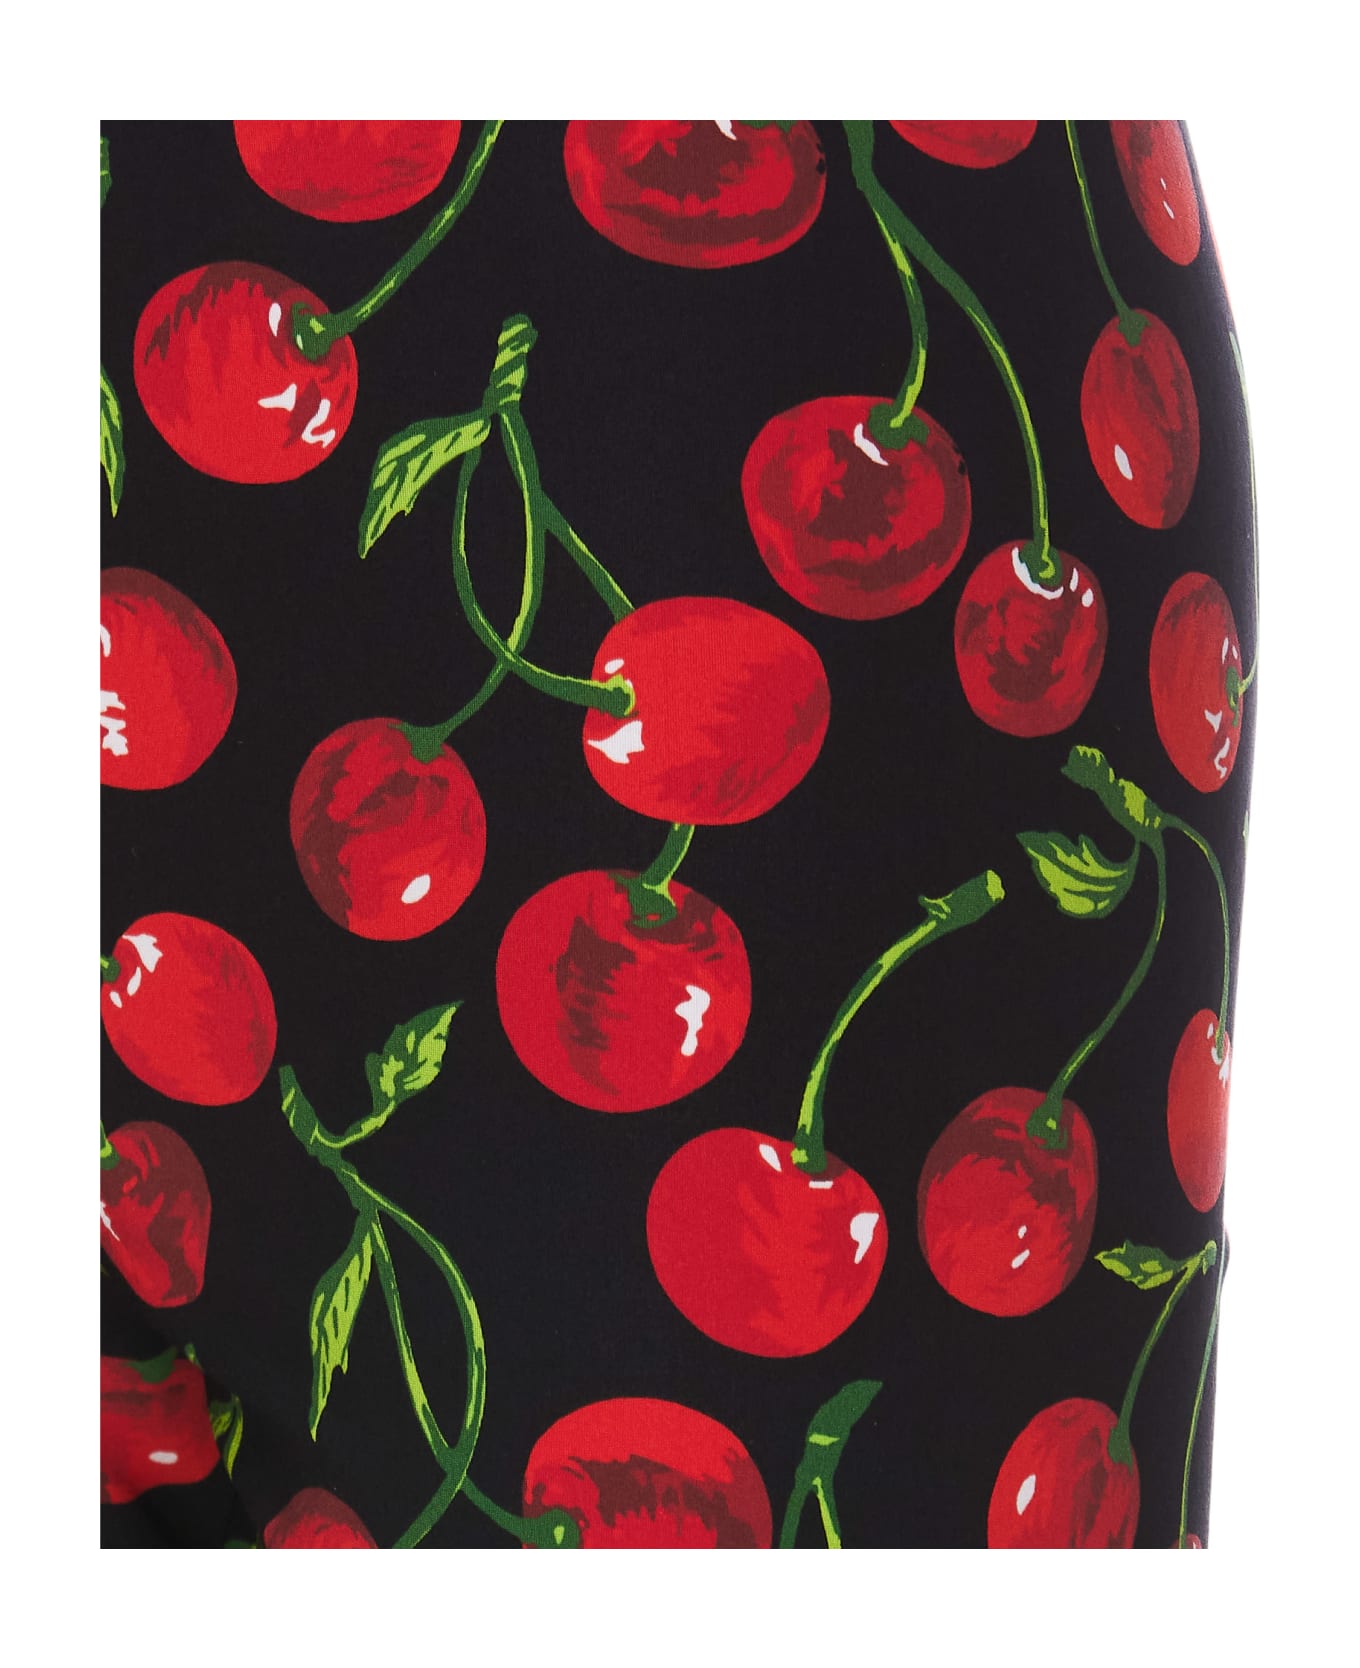 Dolce & Gabbana Cherry Print Leggings - Multicolor